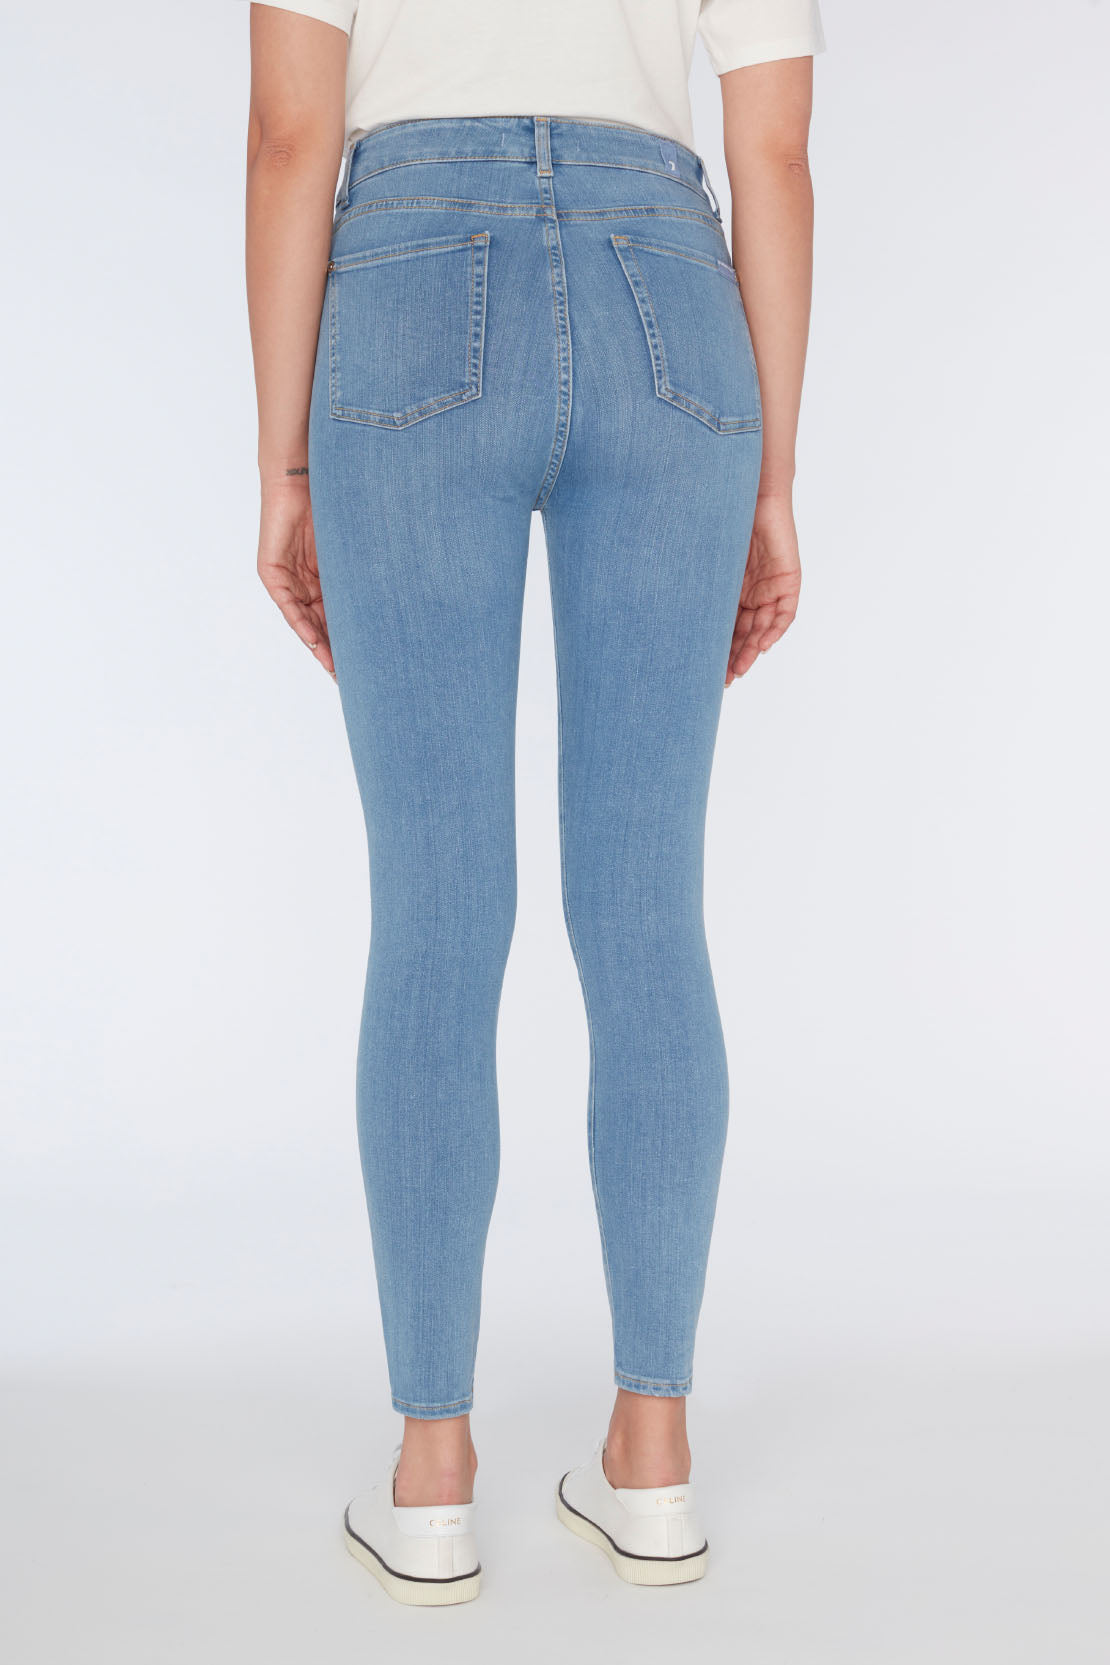 Aubrey Slim Illusion Luxe Staple Light Wash Jeans